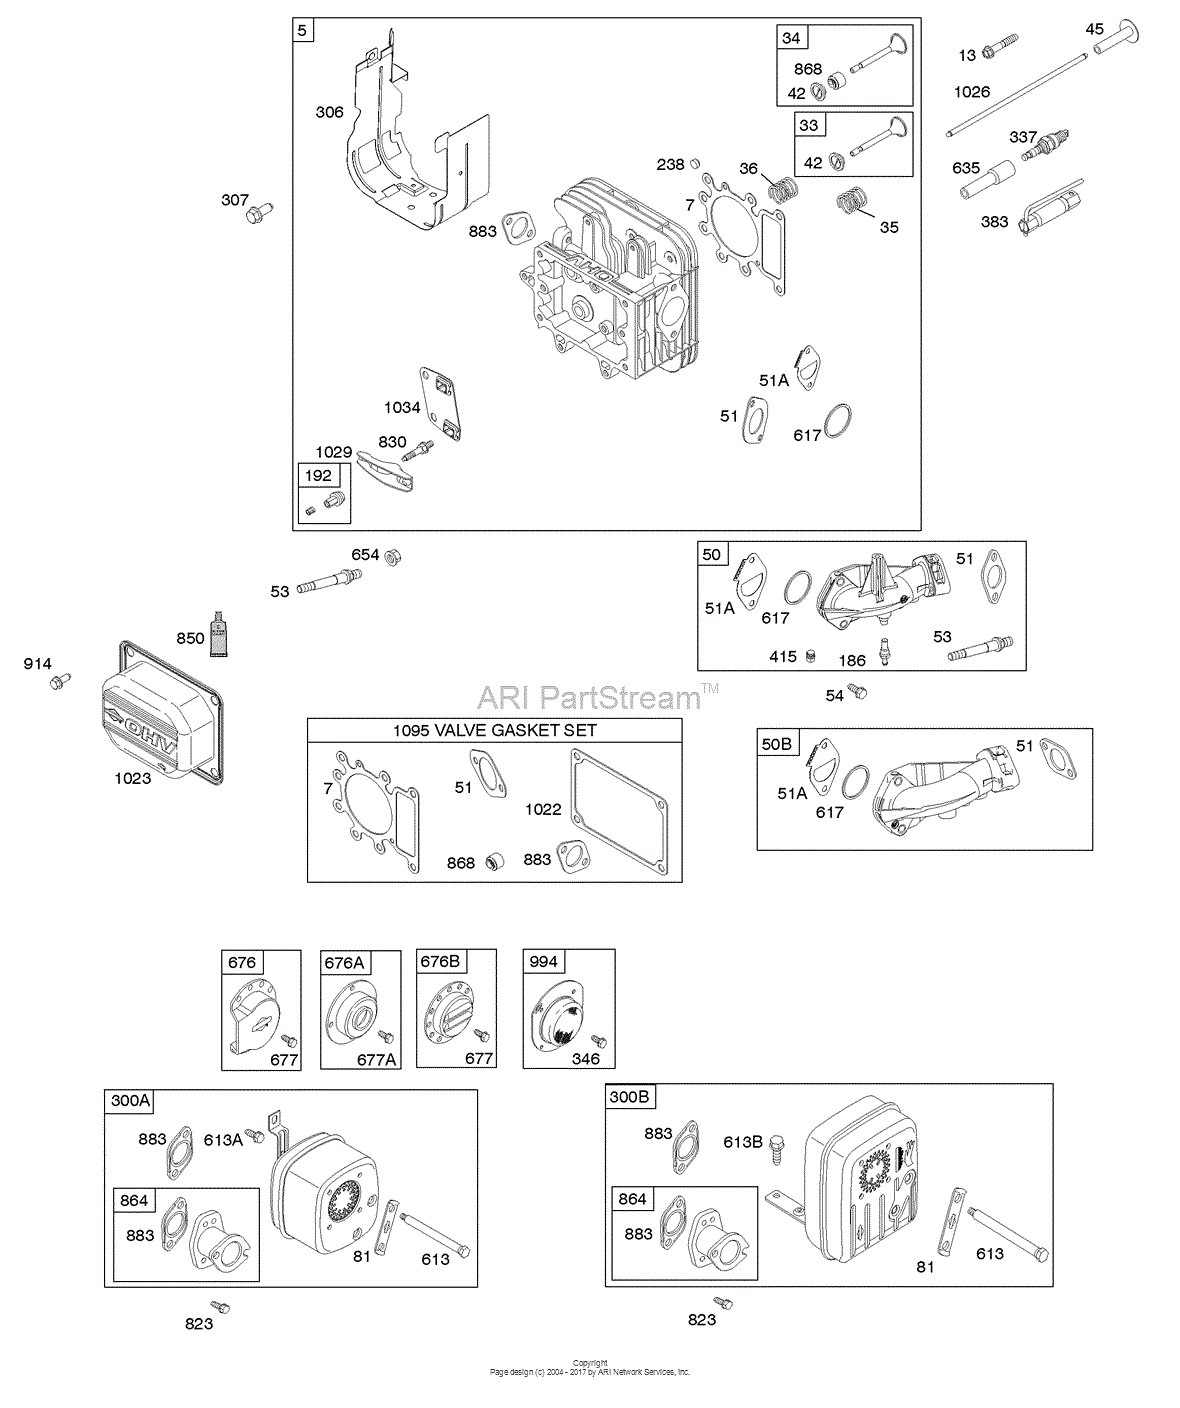 b18a1 intake manifold diagram